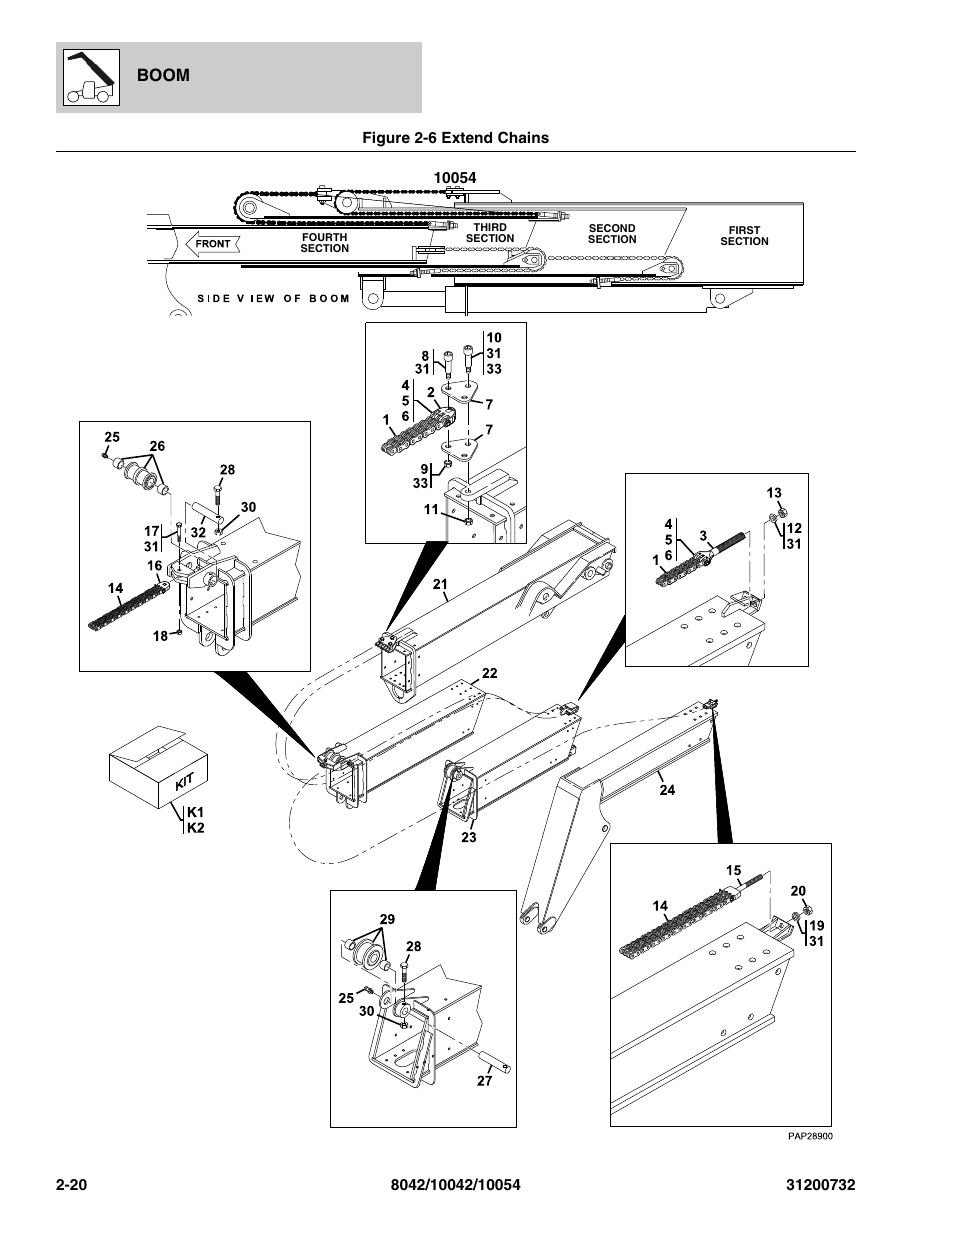 Boom | SkyTrak 8042 Parts Manual User Manual | Page 42 / 388 | Original